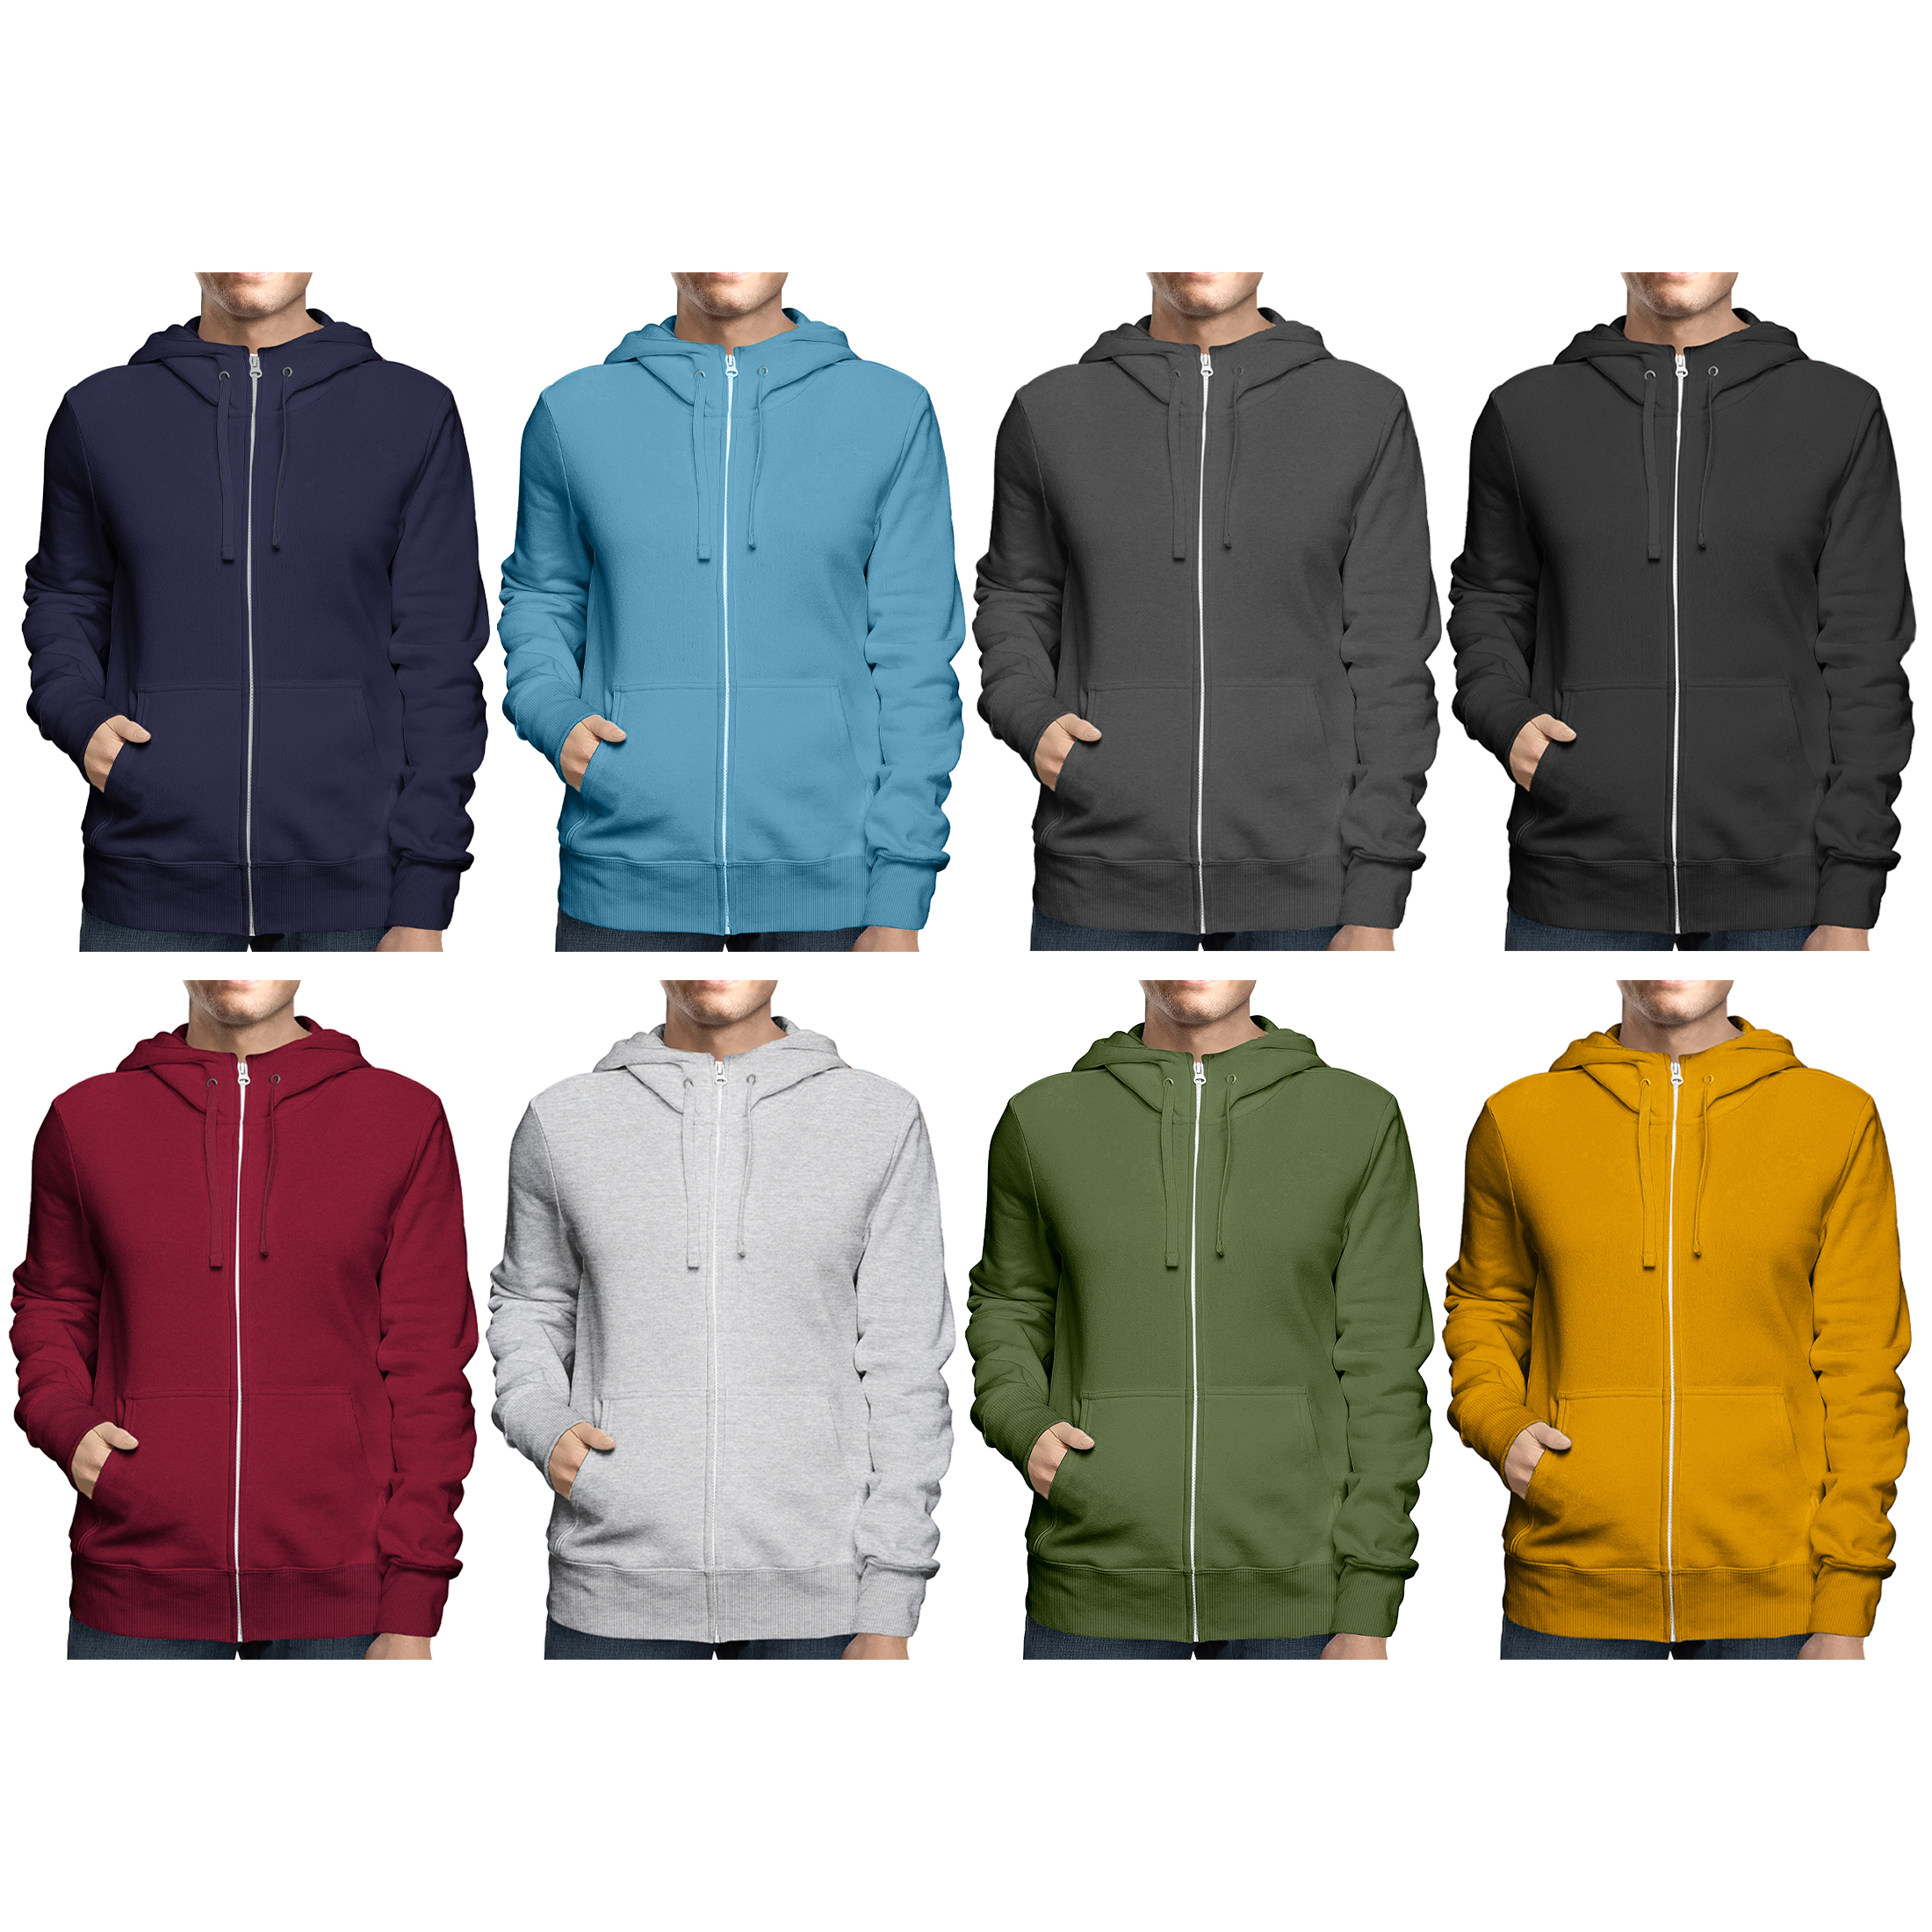 2-Pack: Men's Full Zip Up Fleece-Lined Hoodie Sweatshirt (Big & Tall Size Available) - Black & Timberland, Medium